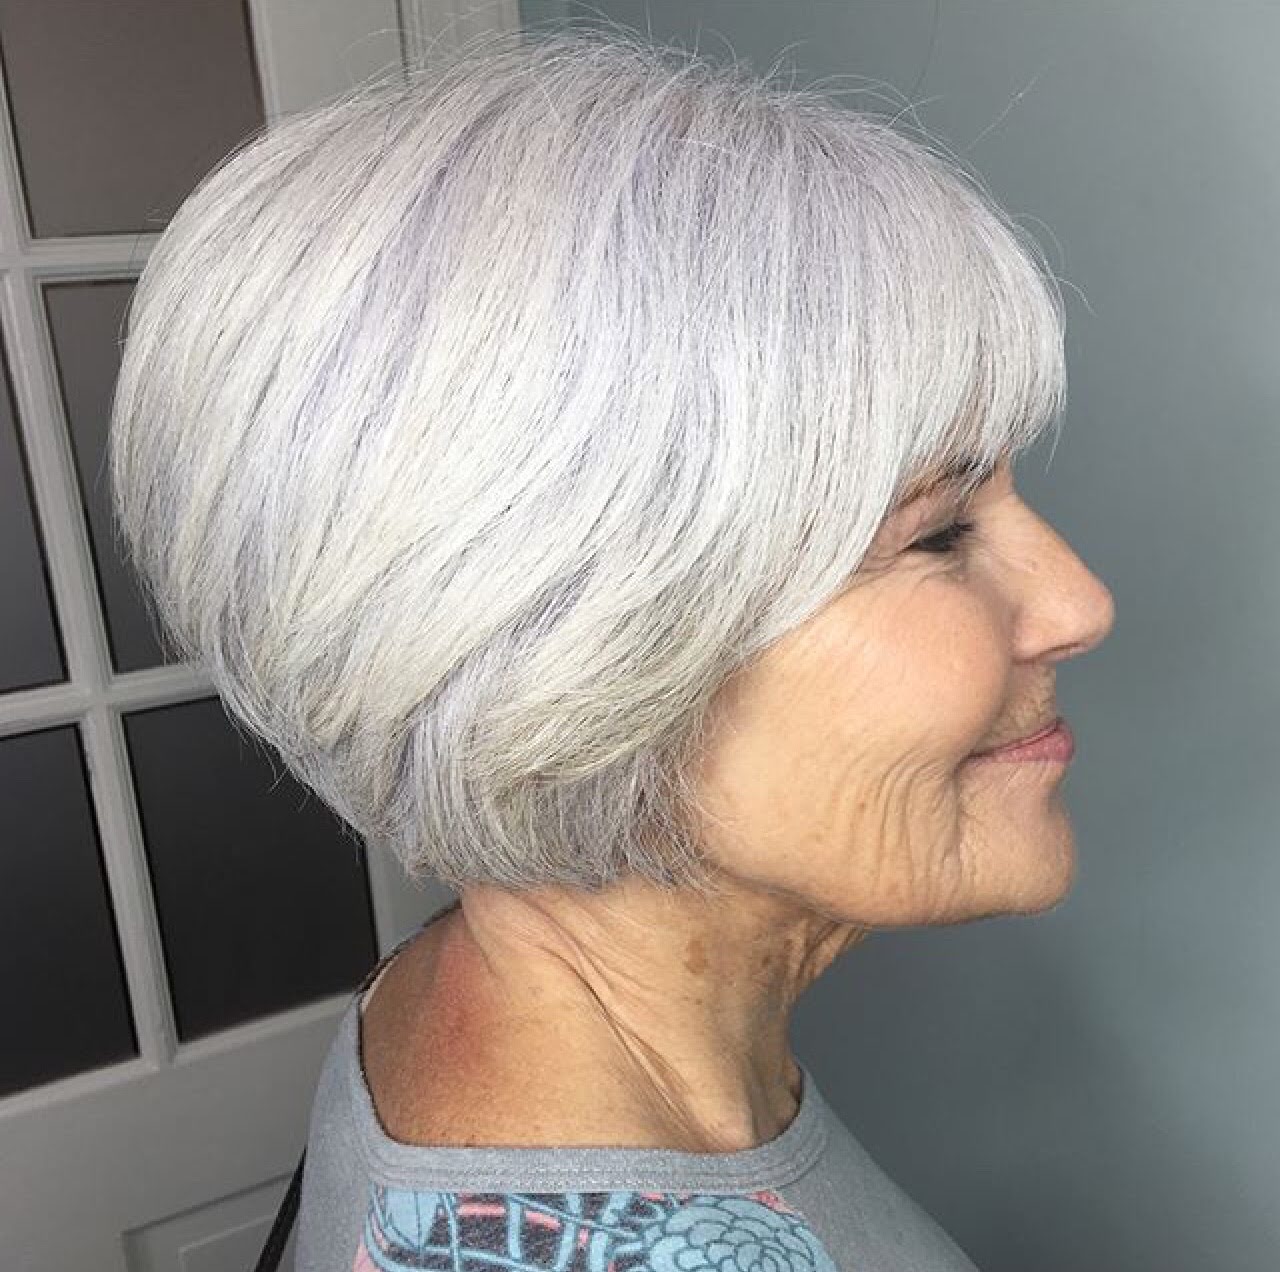 Styled gray hair